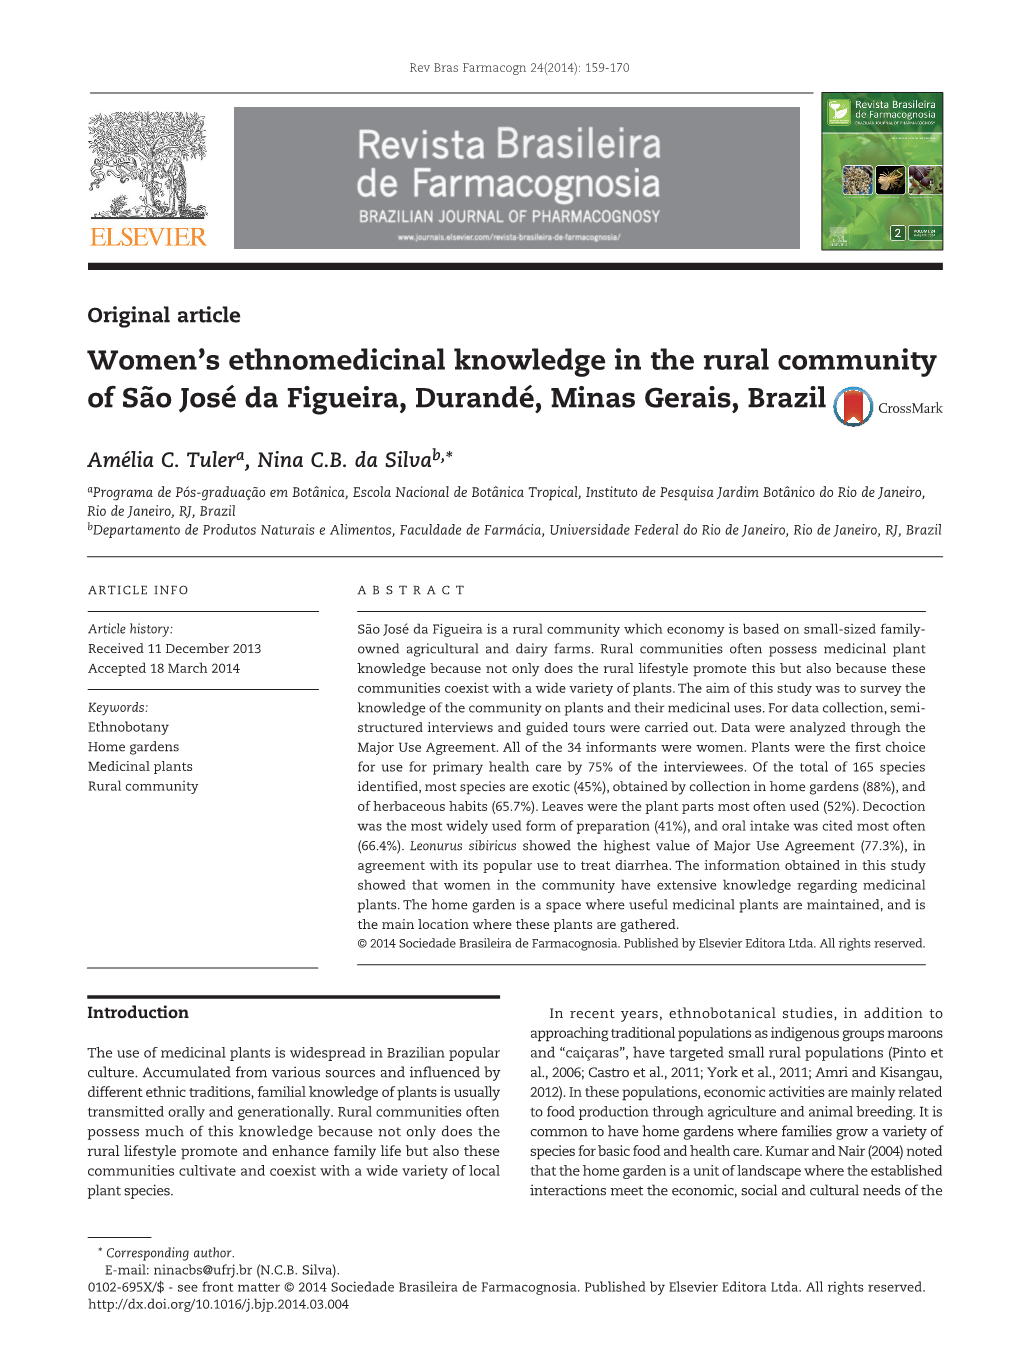 Women's Ethnomedicinal Knowledge in the Rural Community of São José